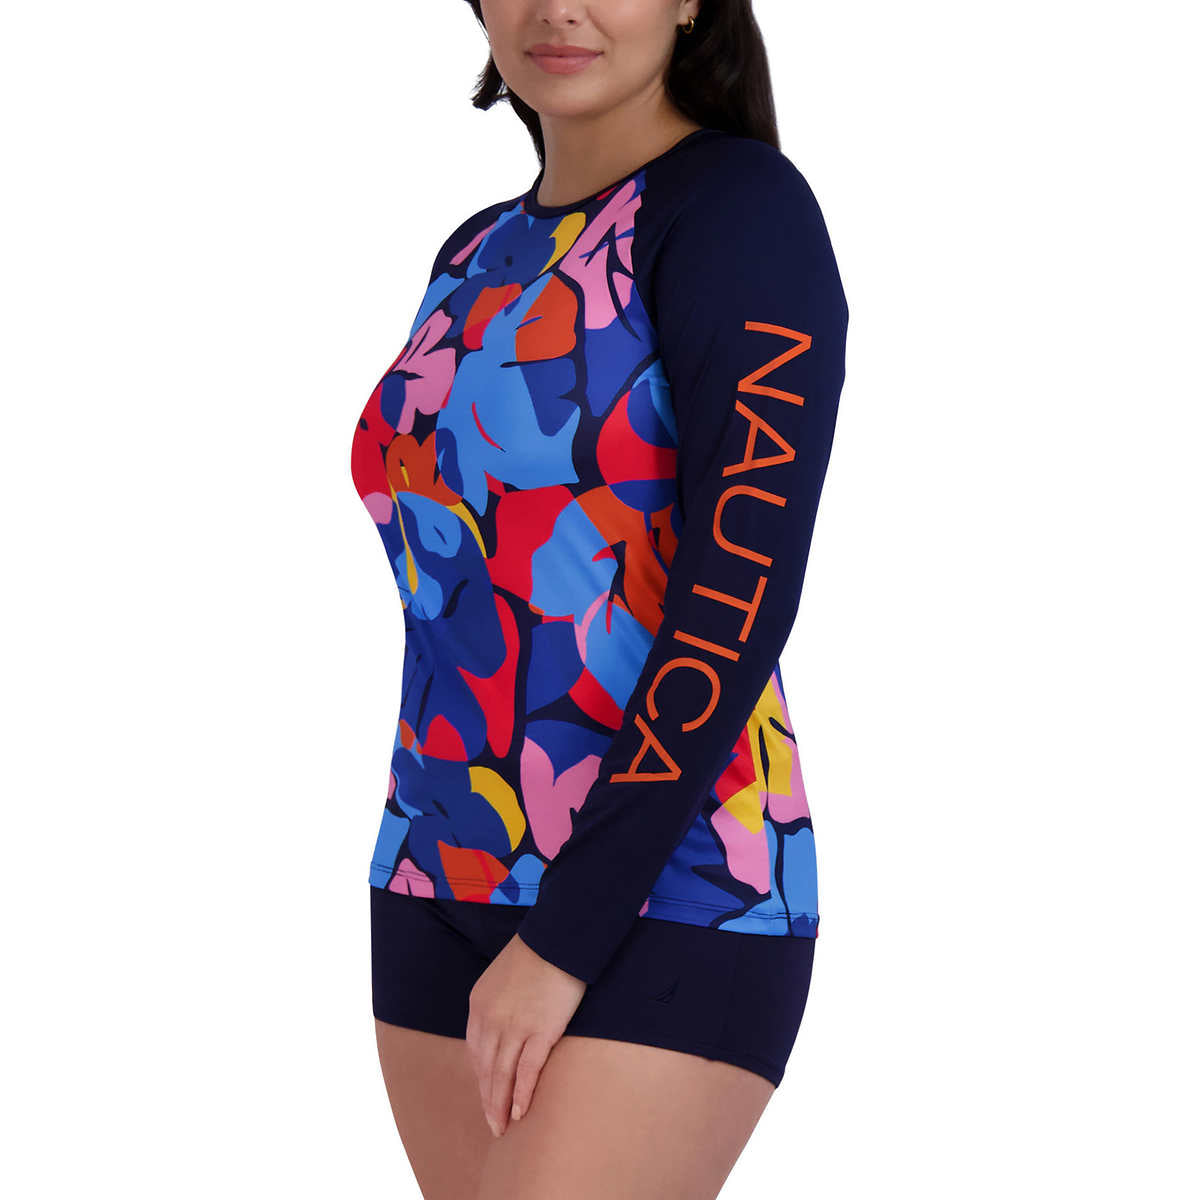 Nautica Women's Long Sleeve Floral Graphic Print UPF 30+ Beach Swim Rashguard Top